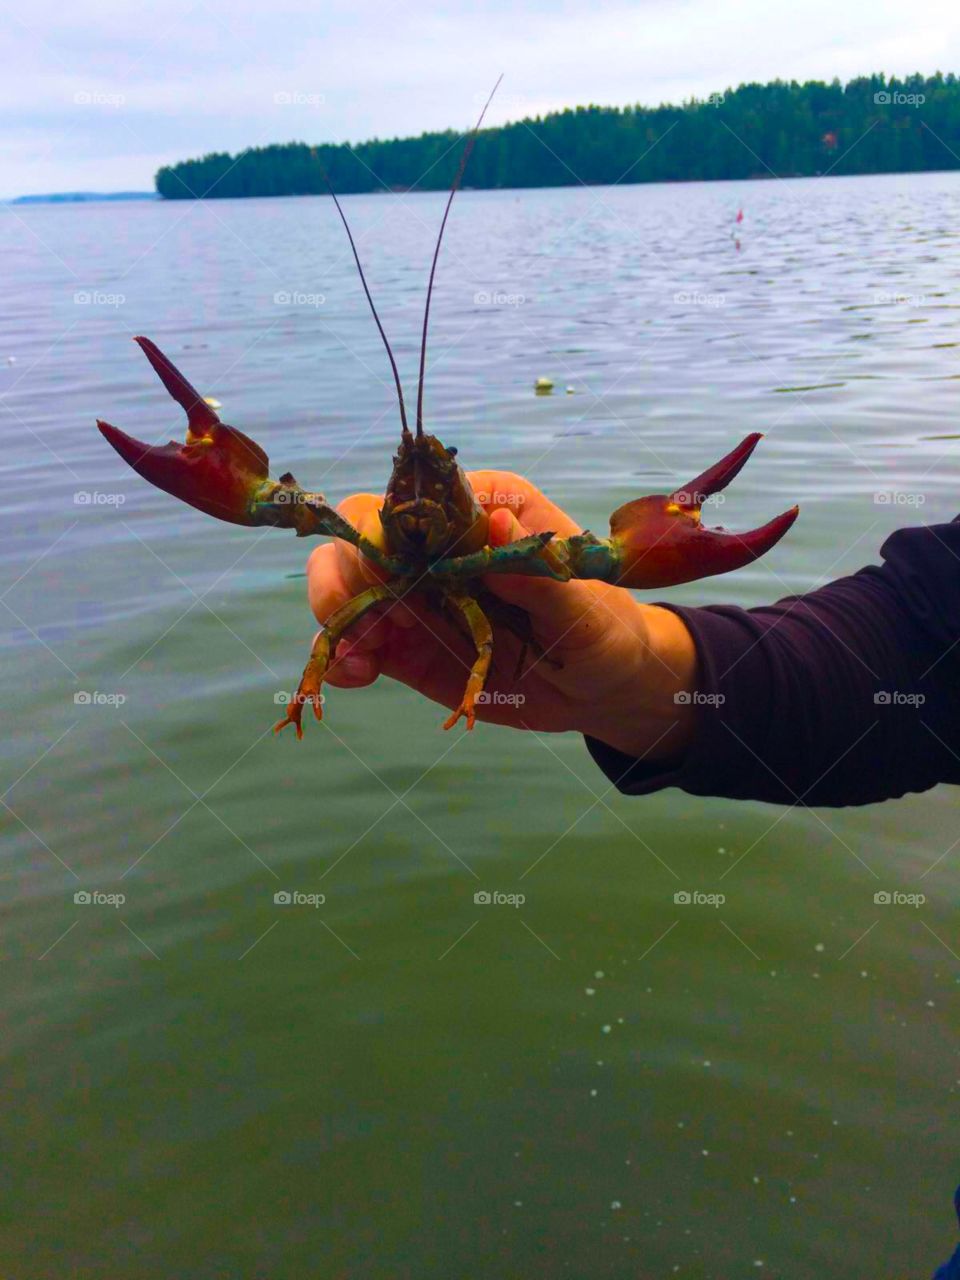 Crab life